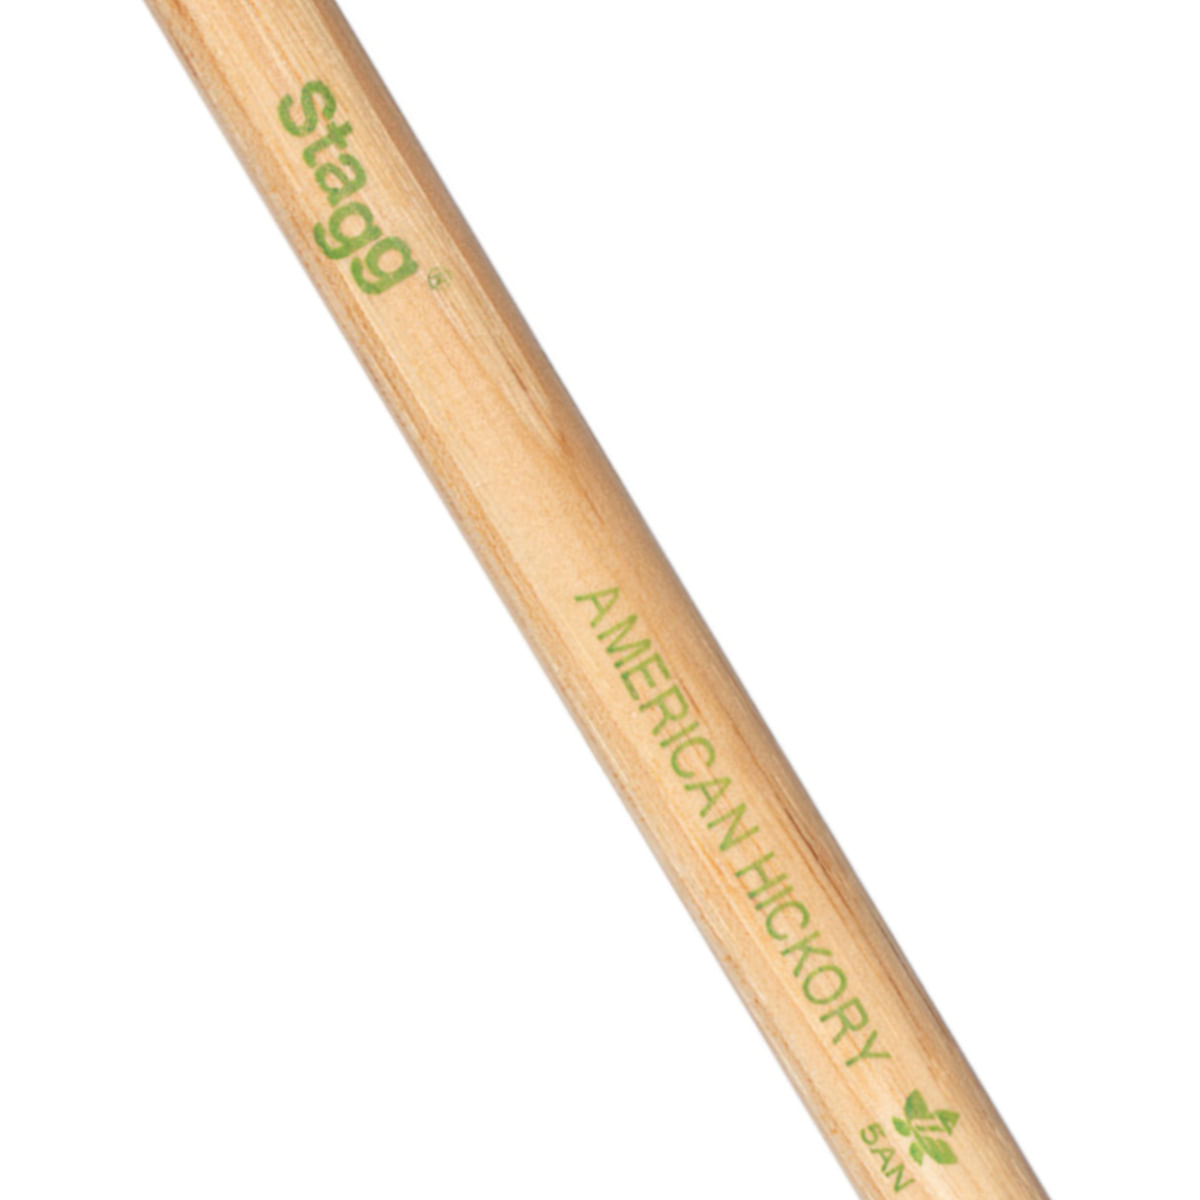 Buy Stagg SHV5AN 5A Hickory V Drum Sticks- Nylon Tip Online